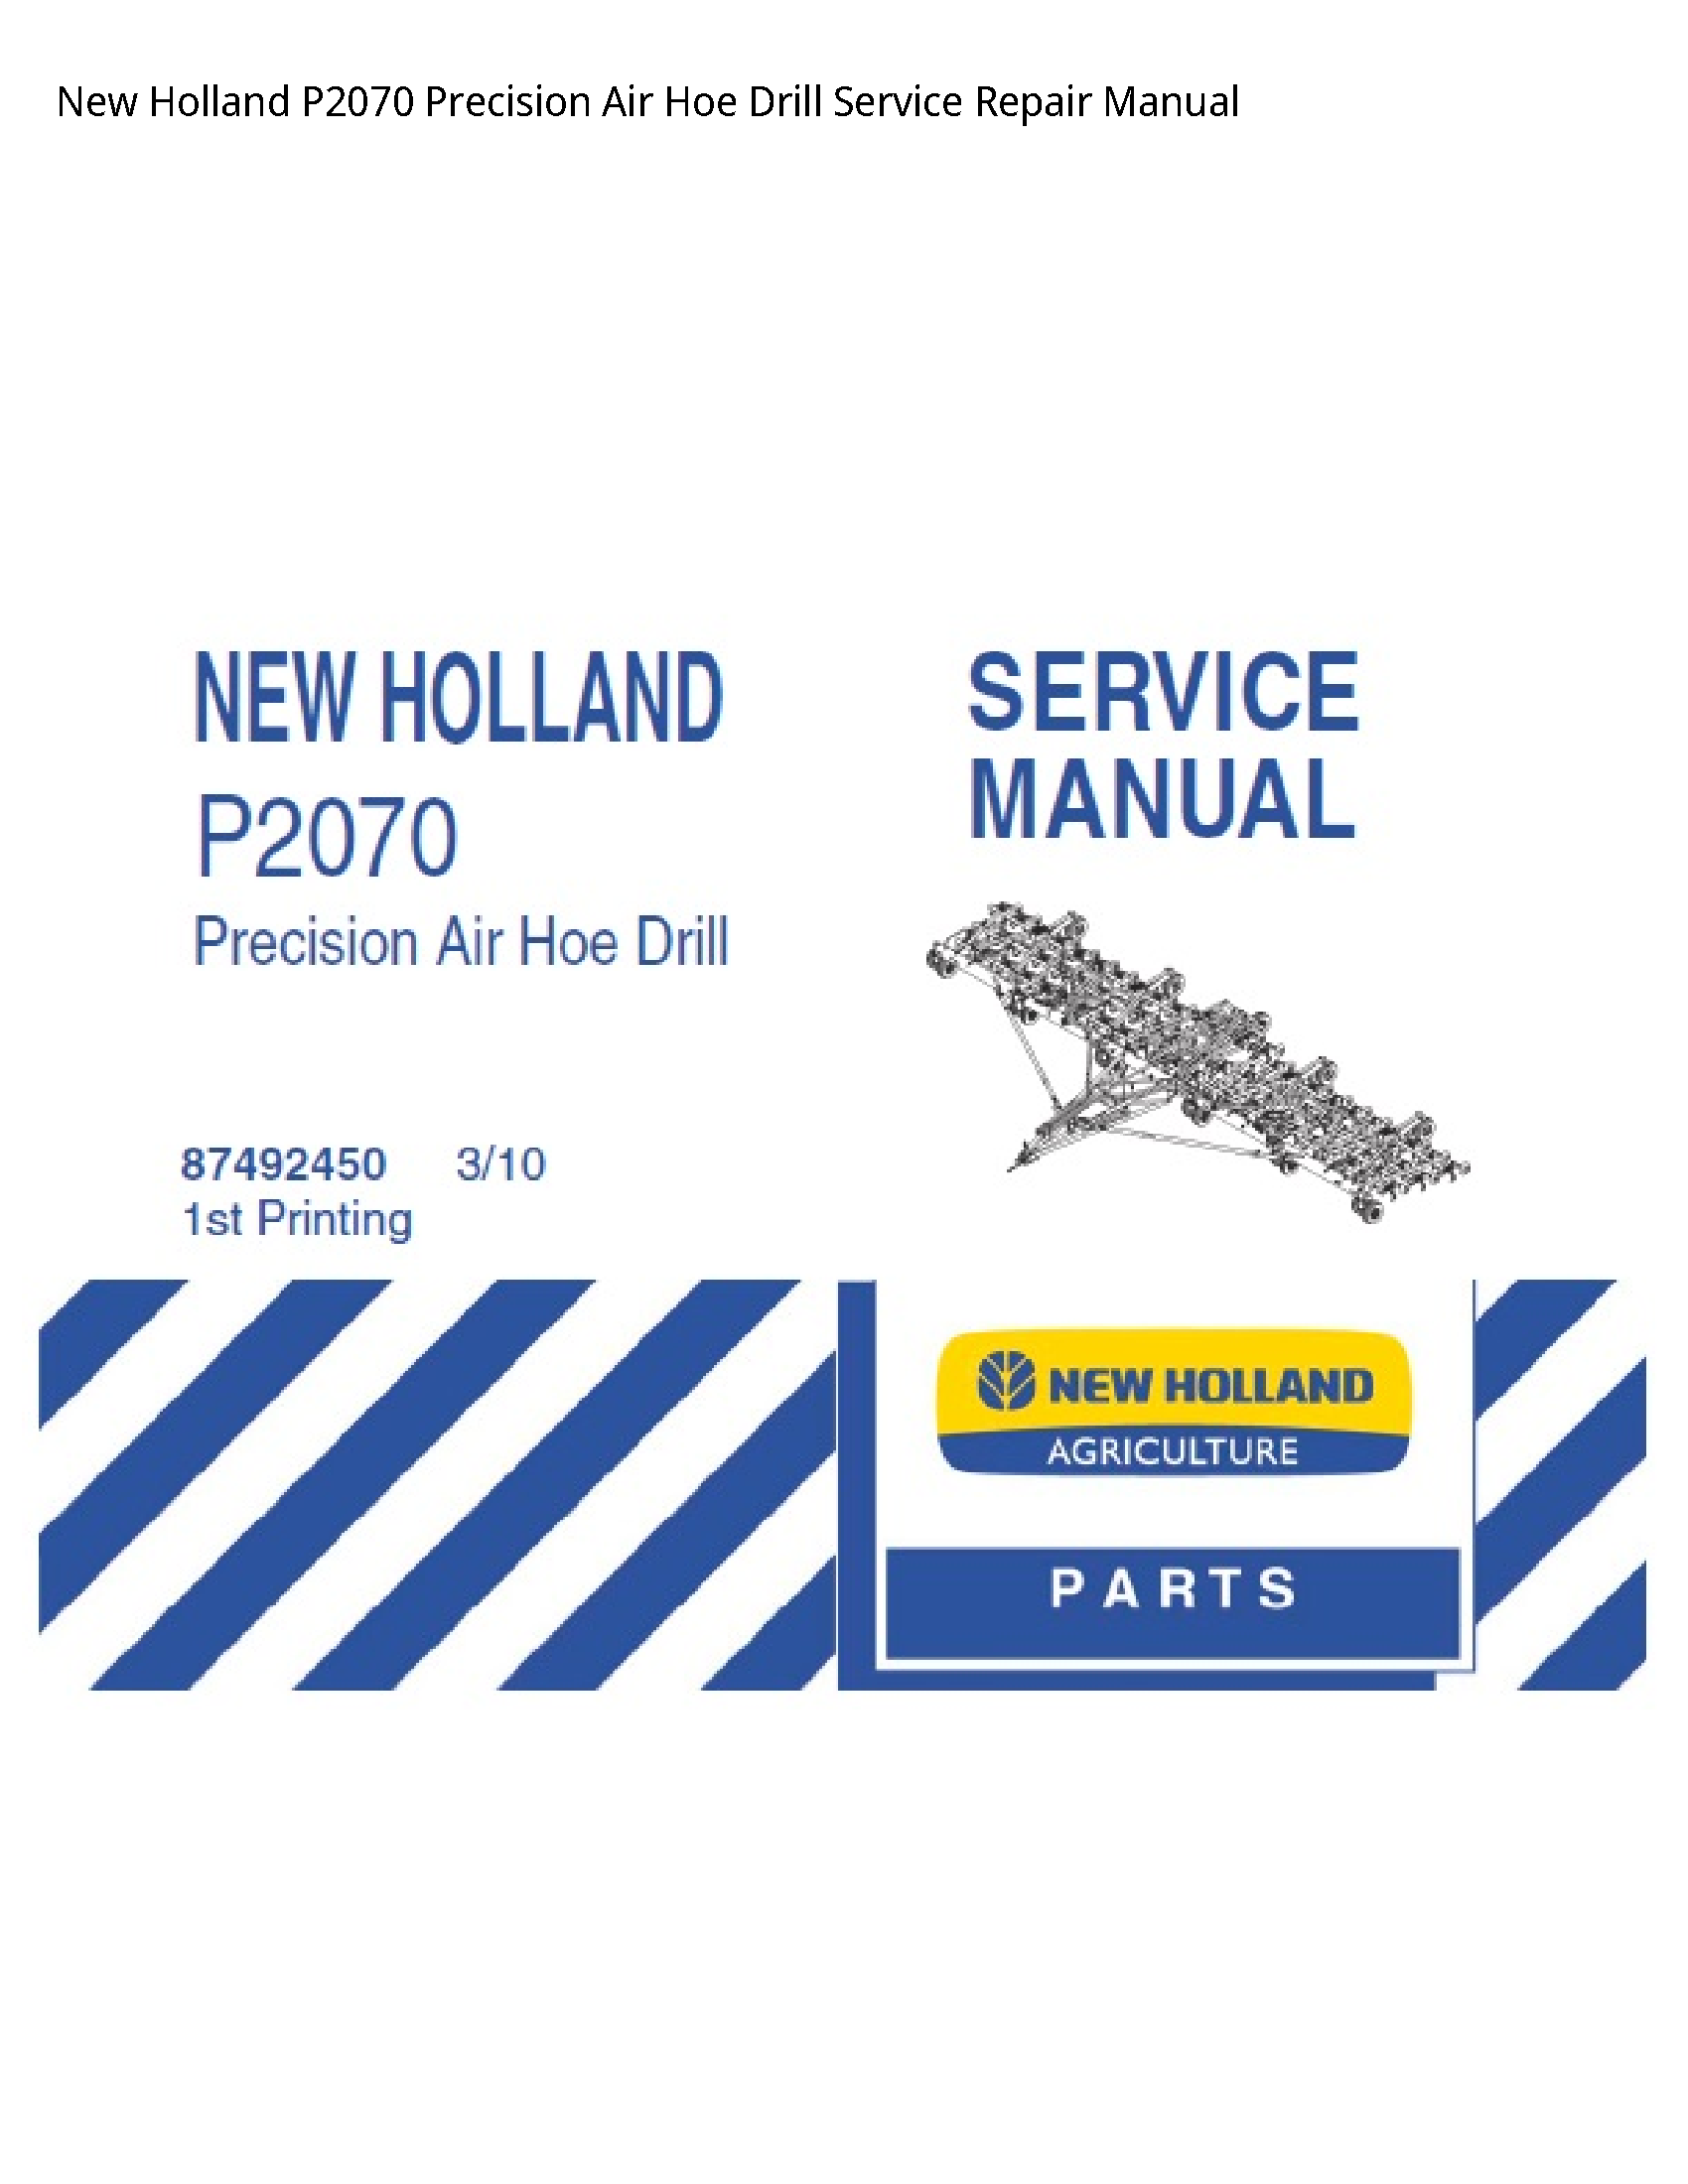 New Holland P2070 Precision Air Hoe Drill manual